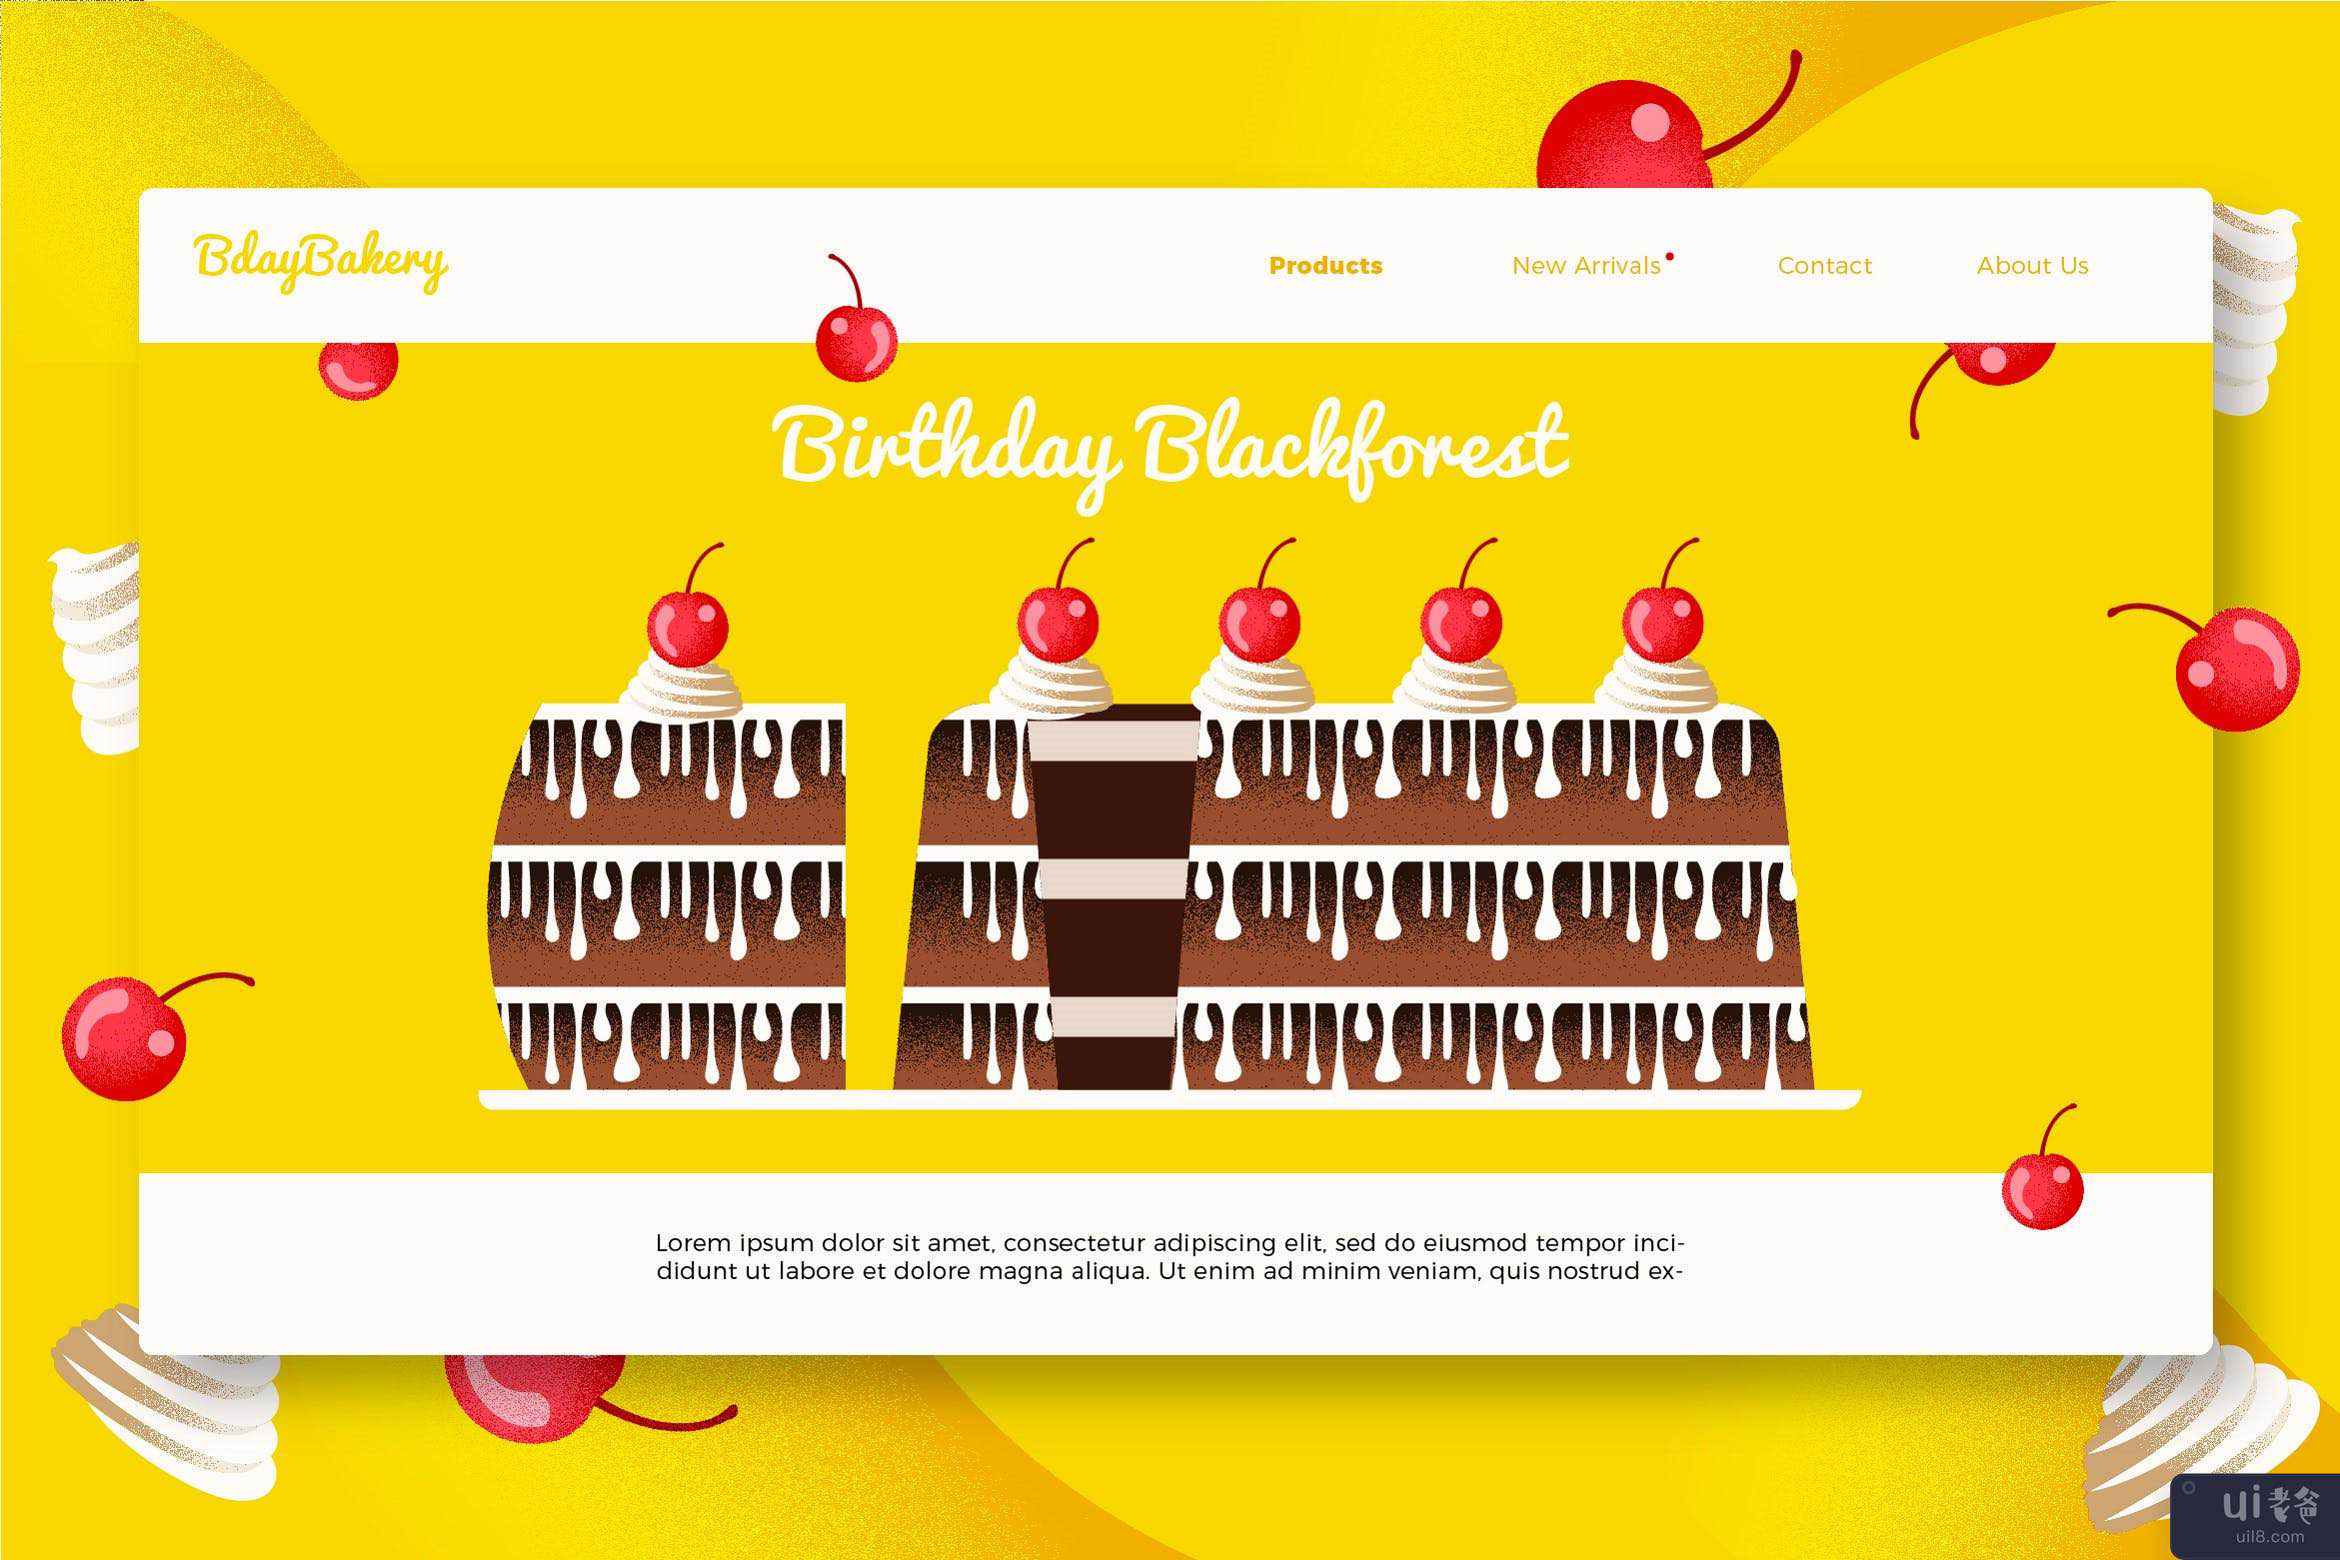 生日蛋糕 - 横幅和登陆页面(Birthday Cake - Banner & Landing Page)插图2